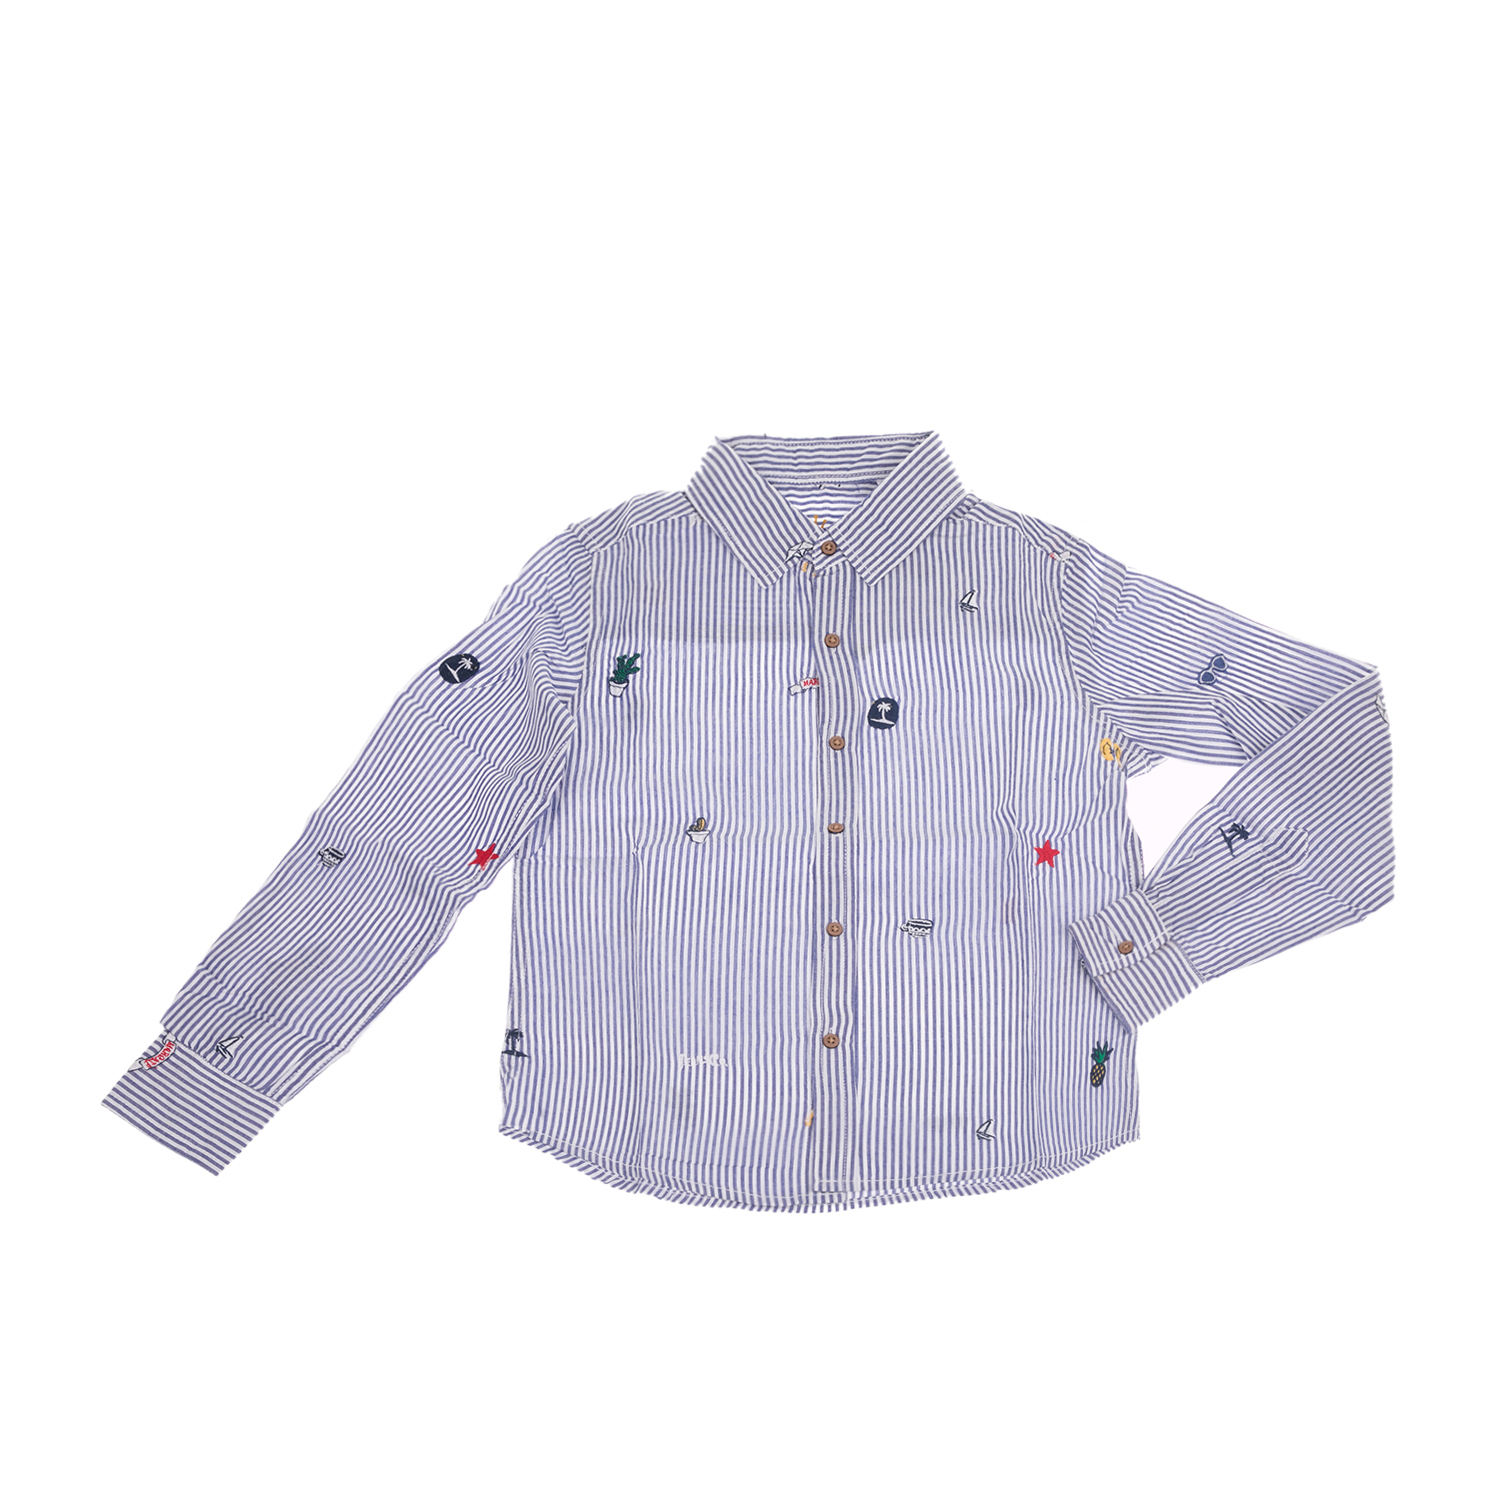 SAM 0-13 Παιδικό μακρυμάνικο πουκάμισο με κέντημα SAM 0-13 ριγέ